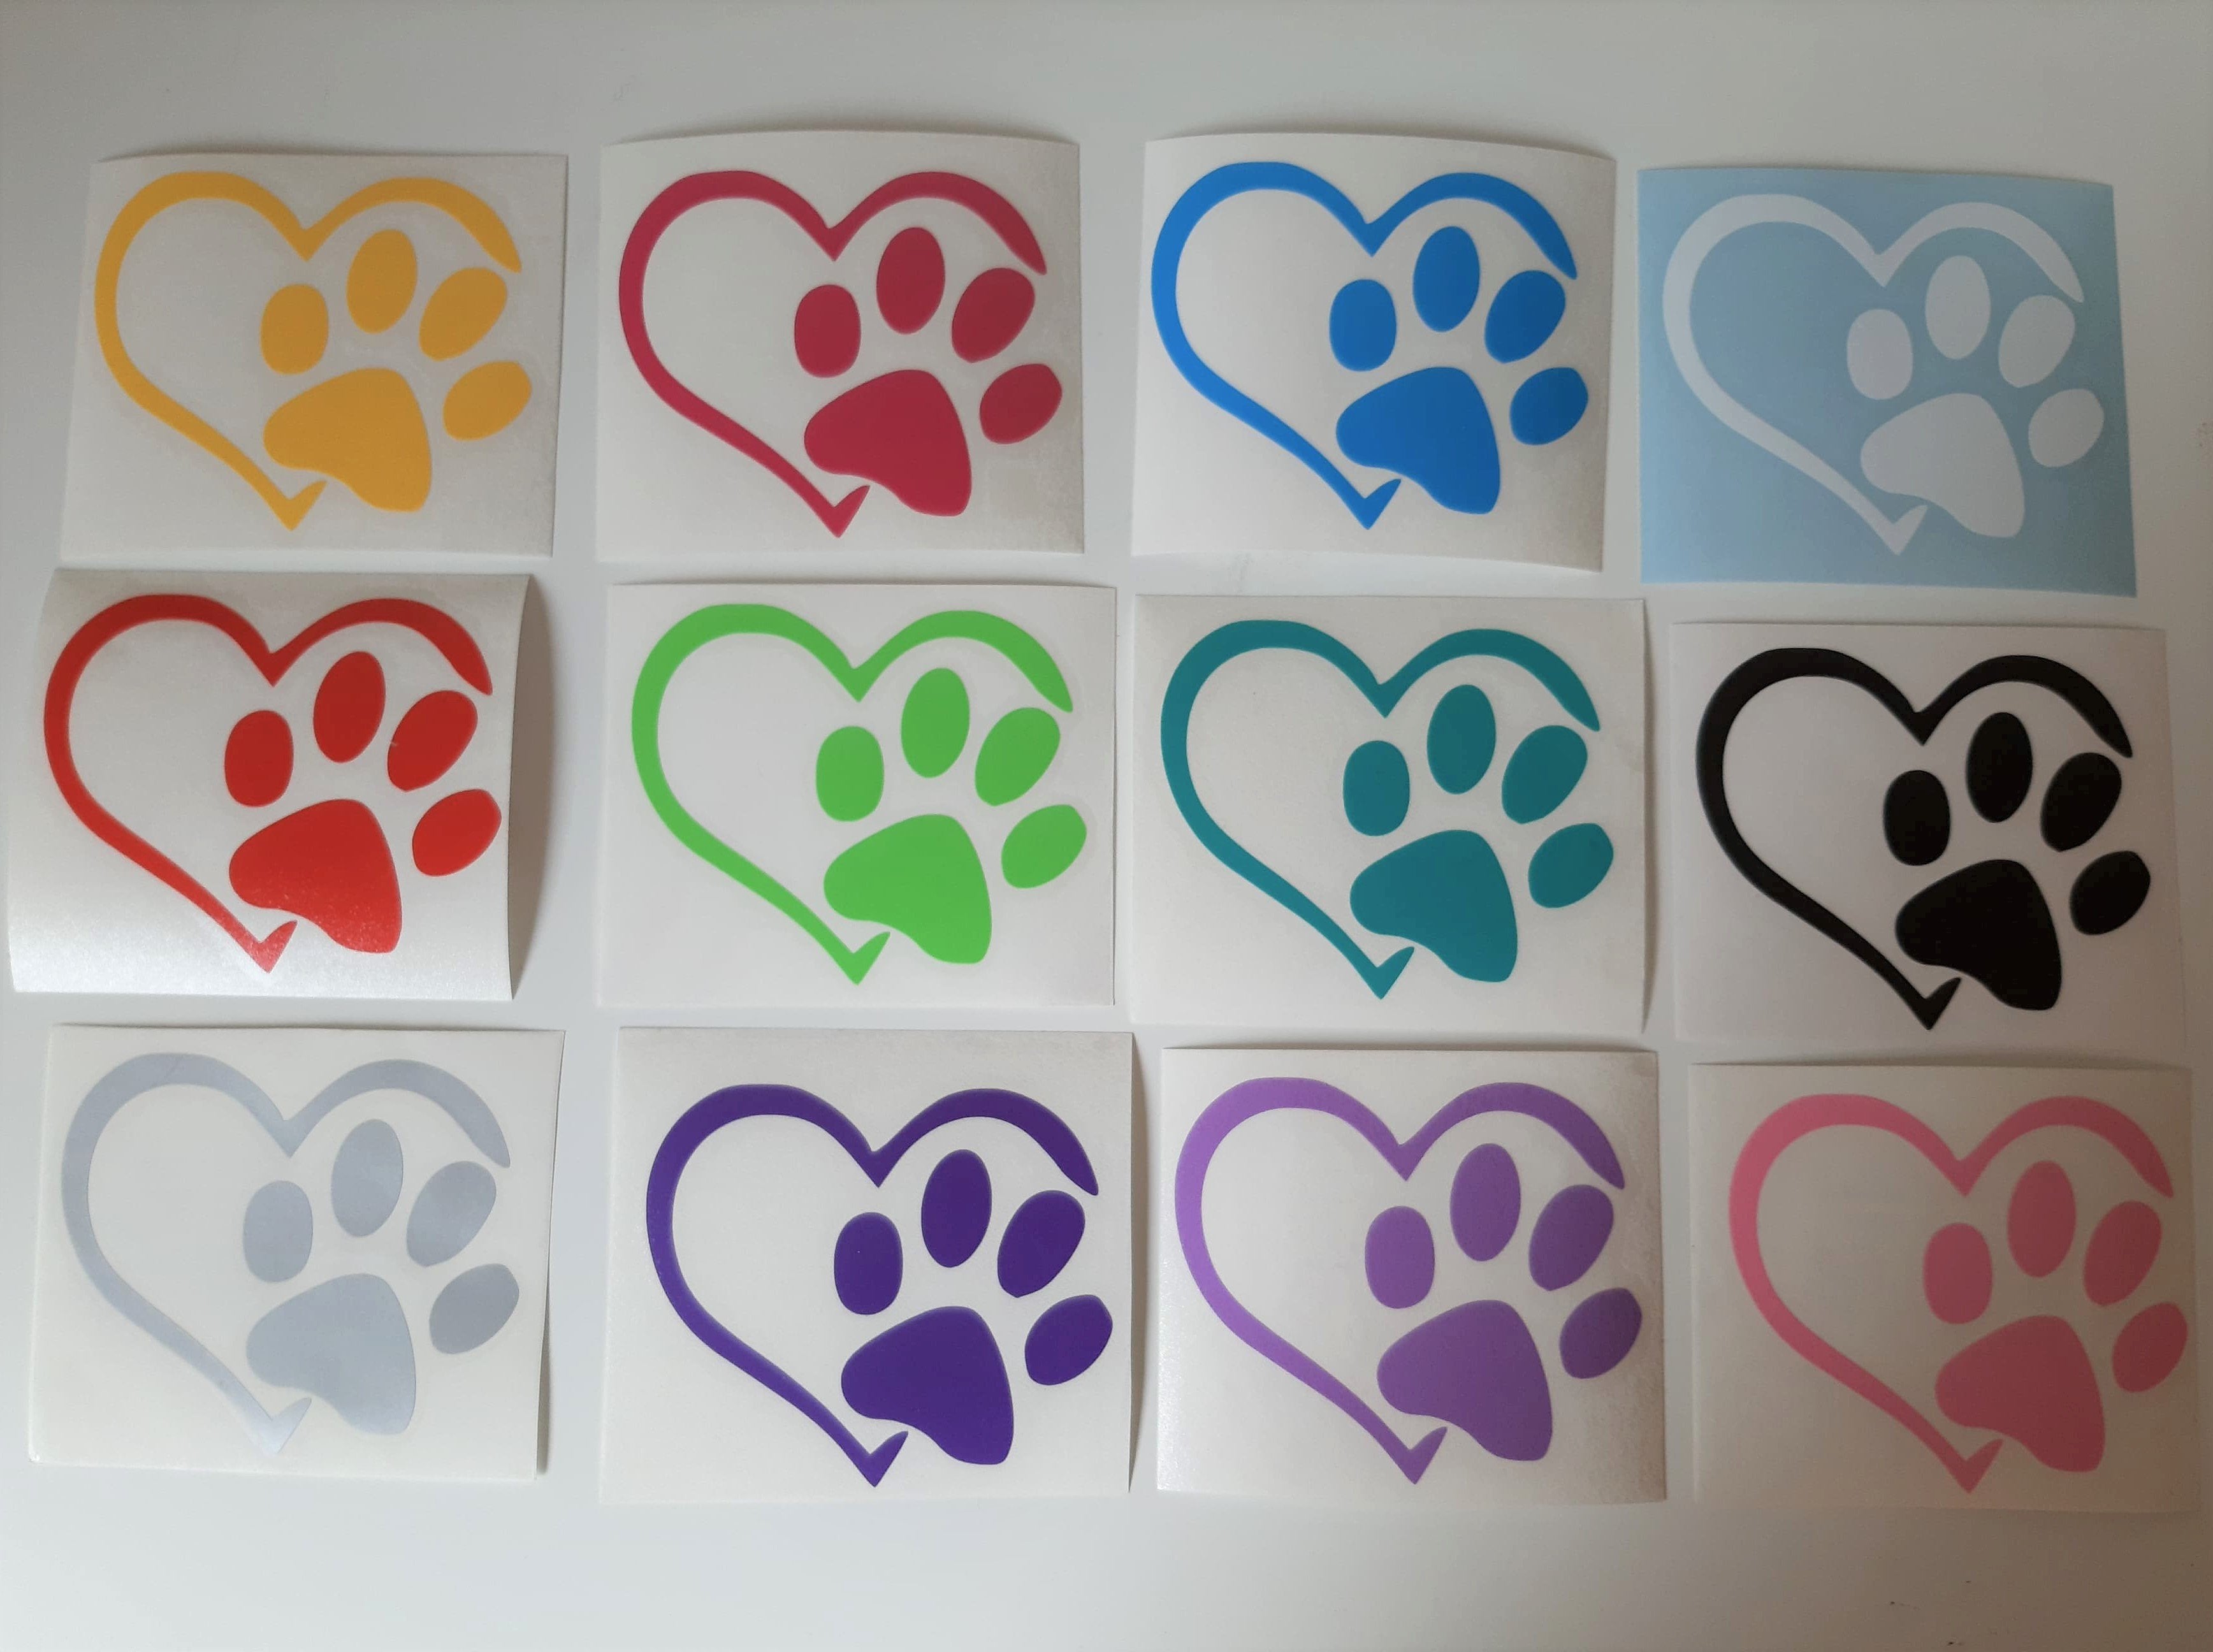 Love Heart & Paw Sticker - My Crafty Dog